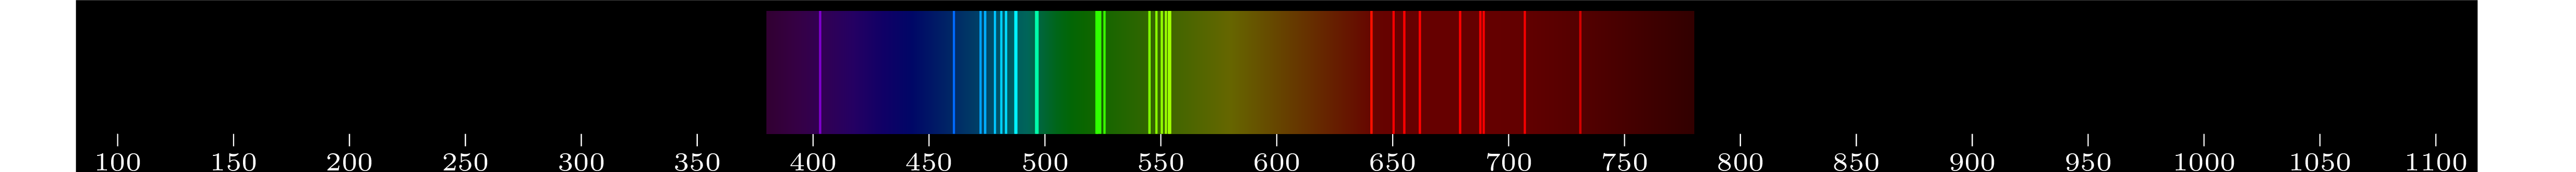 emmision spectra of element Sr